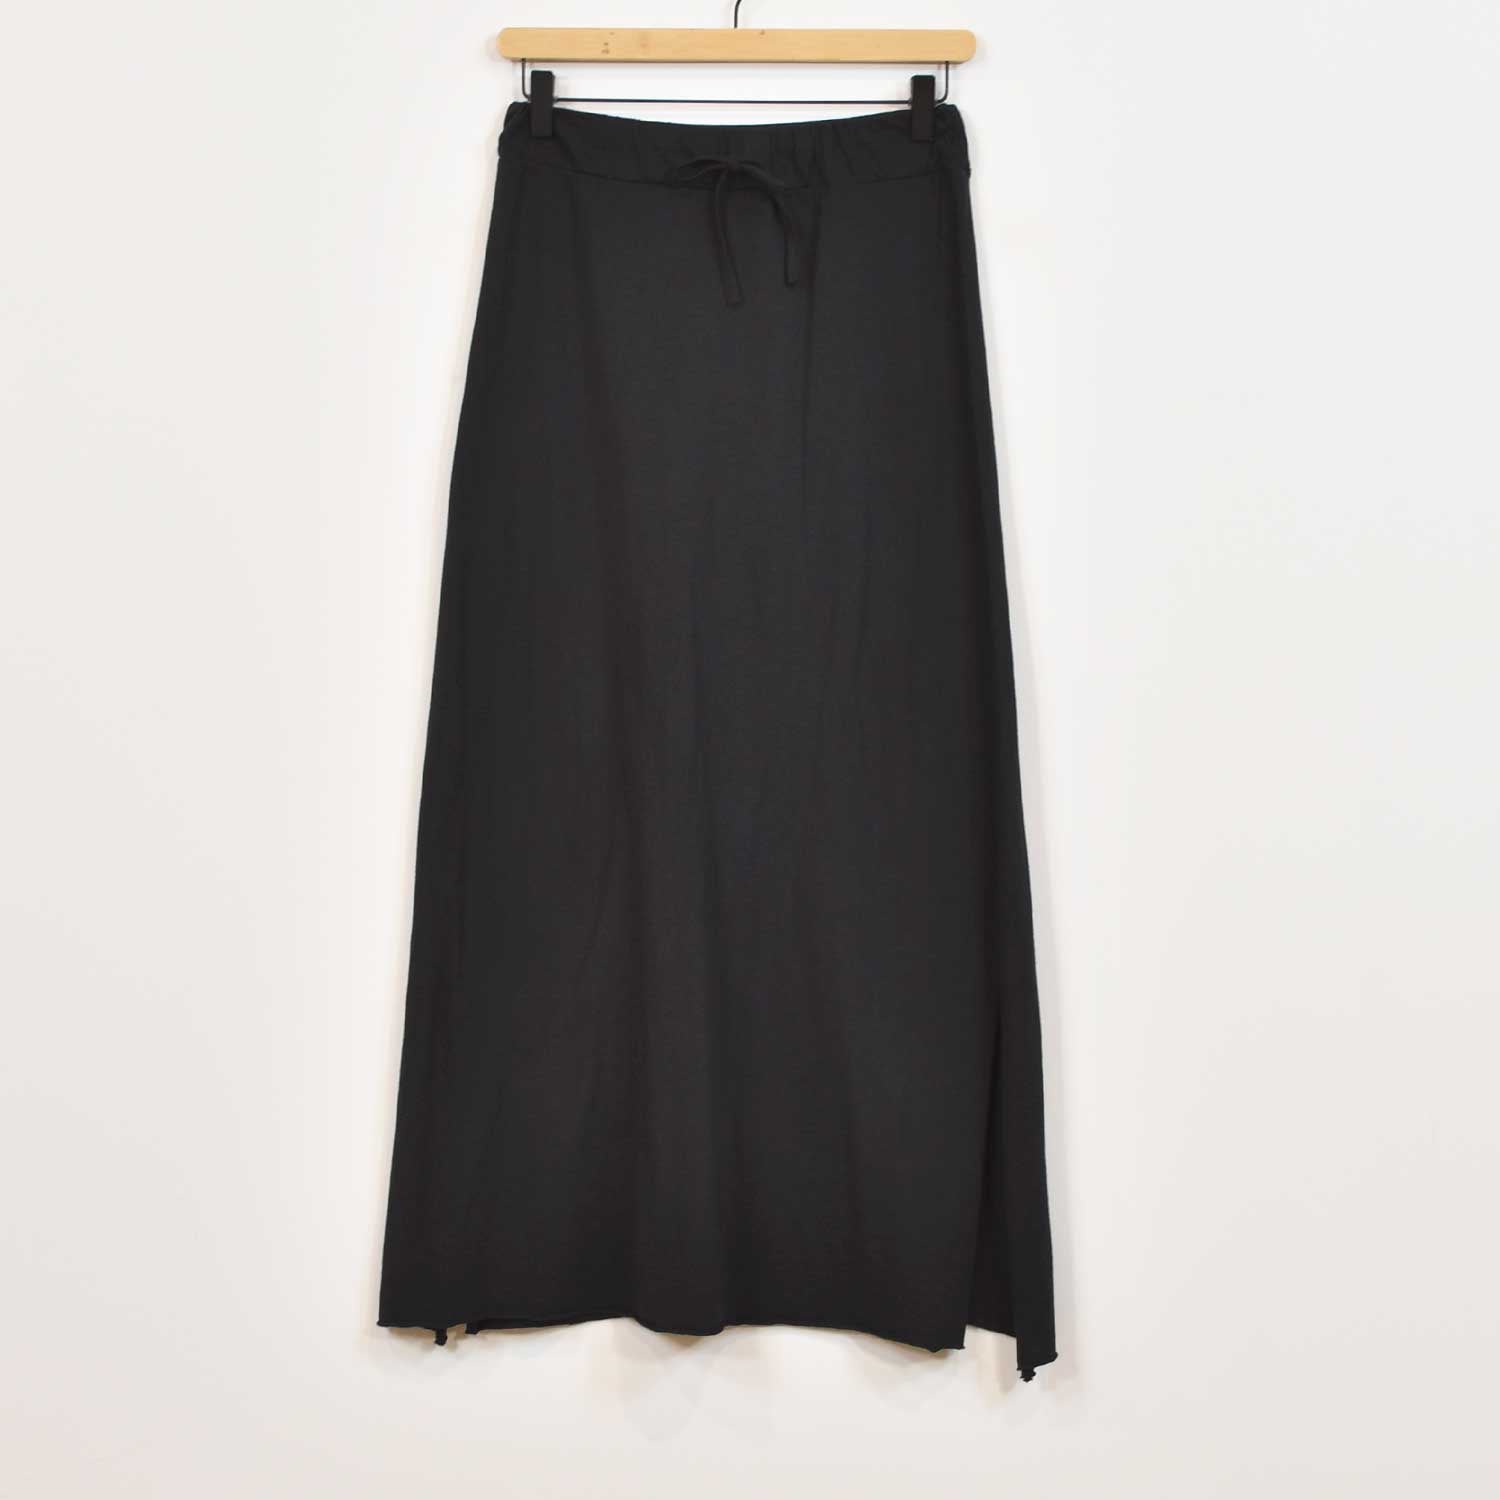 Black cotton skirt